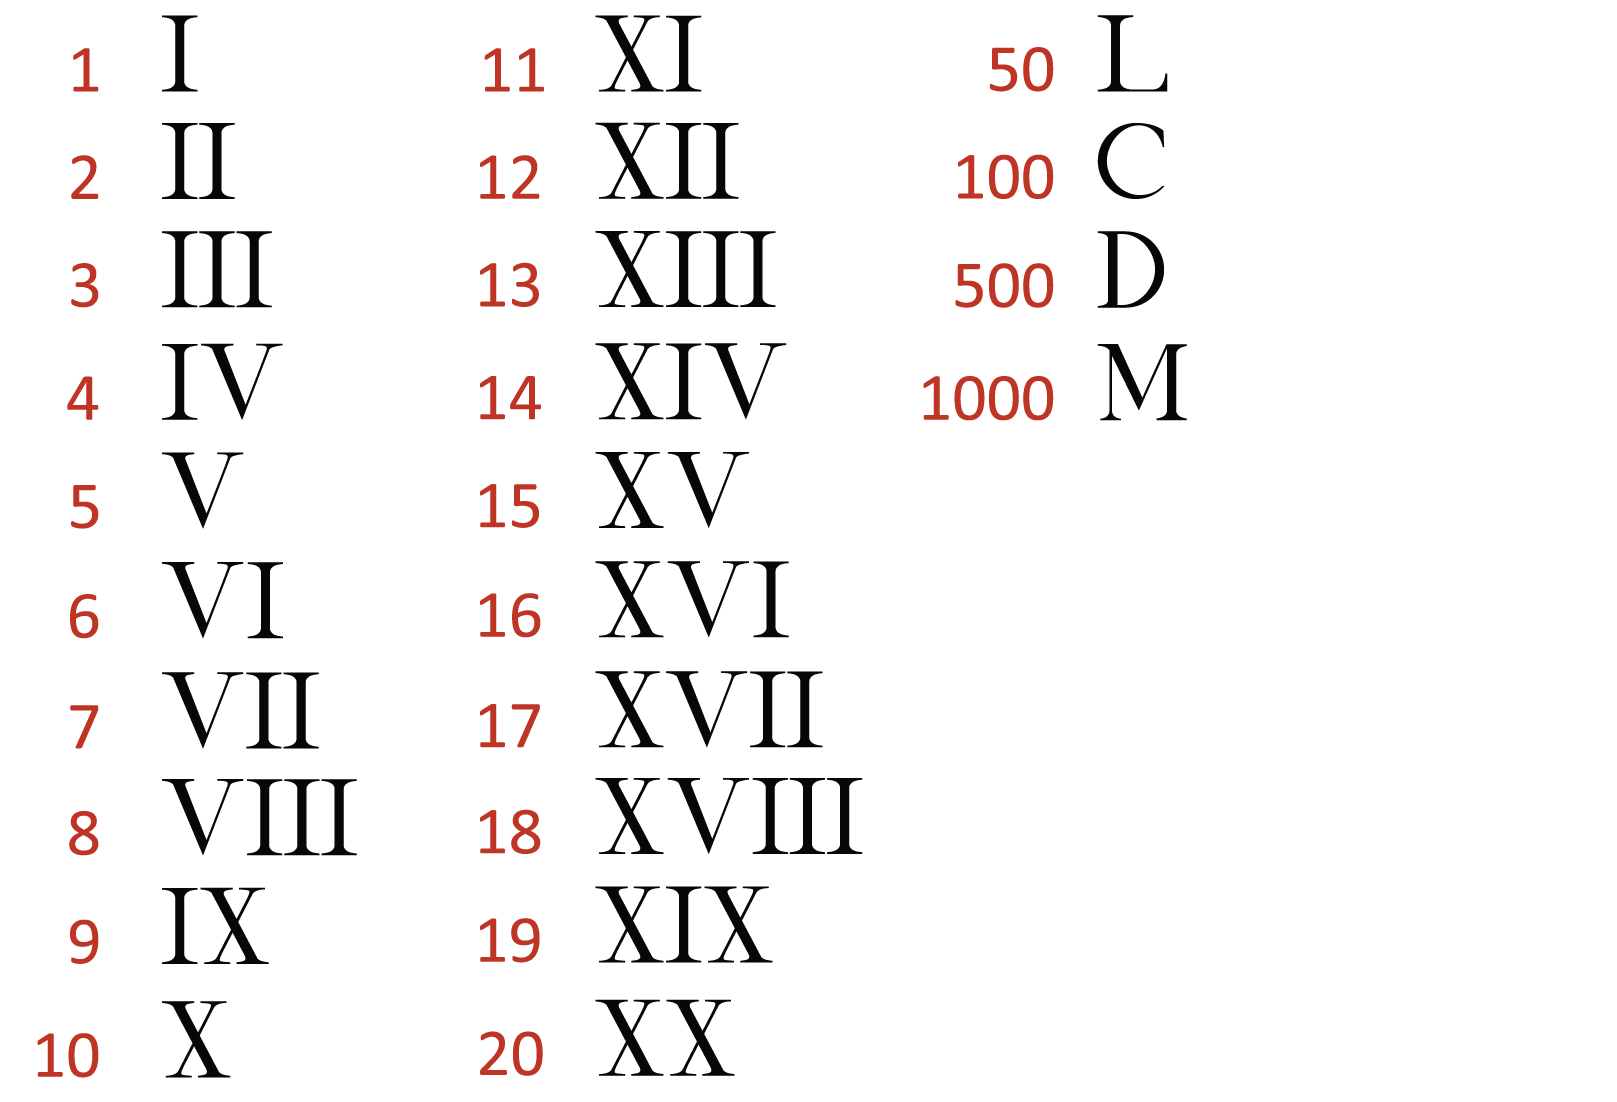 Века таблица римскими цифрами до 20. Таблица римских цифр от 1 до 1000. Римские цифры от 1 до 10000 таблица. Таблица римских цифр от 1 до 20.